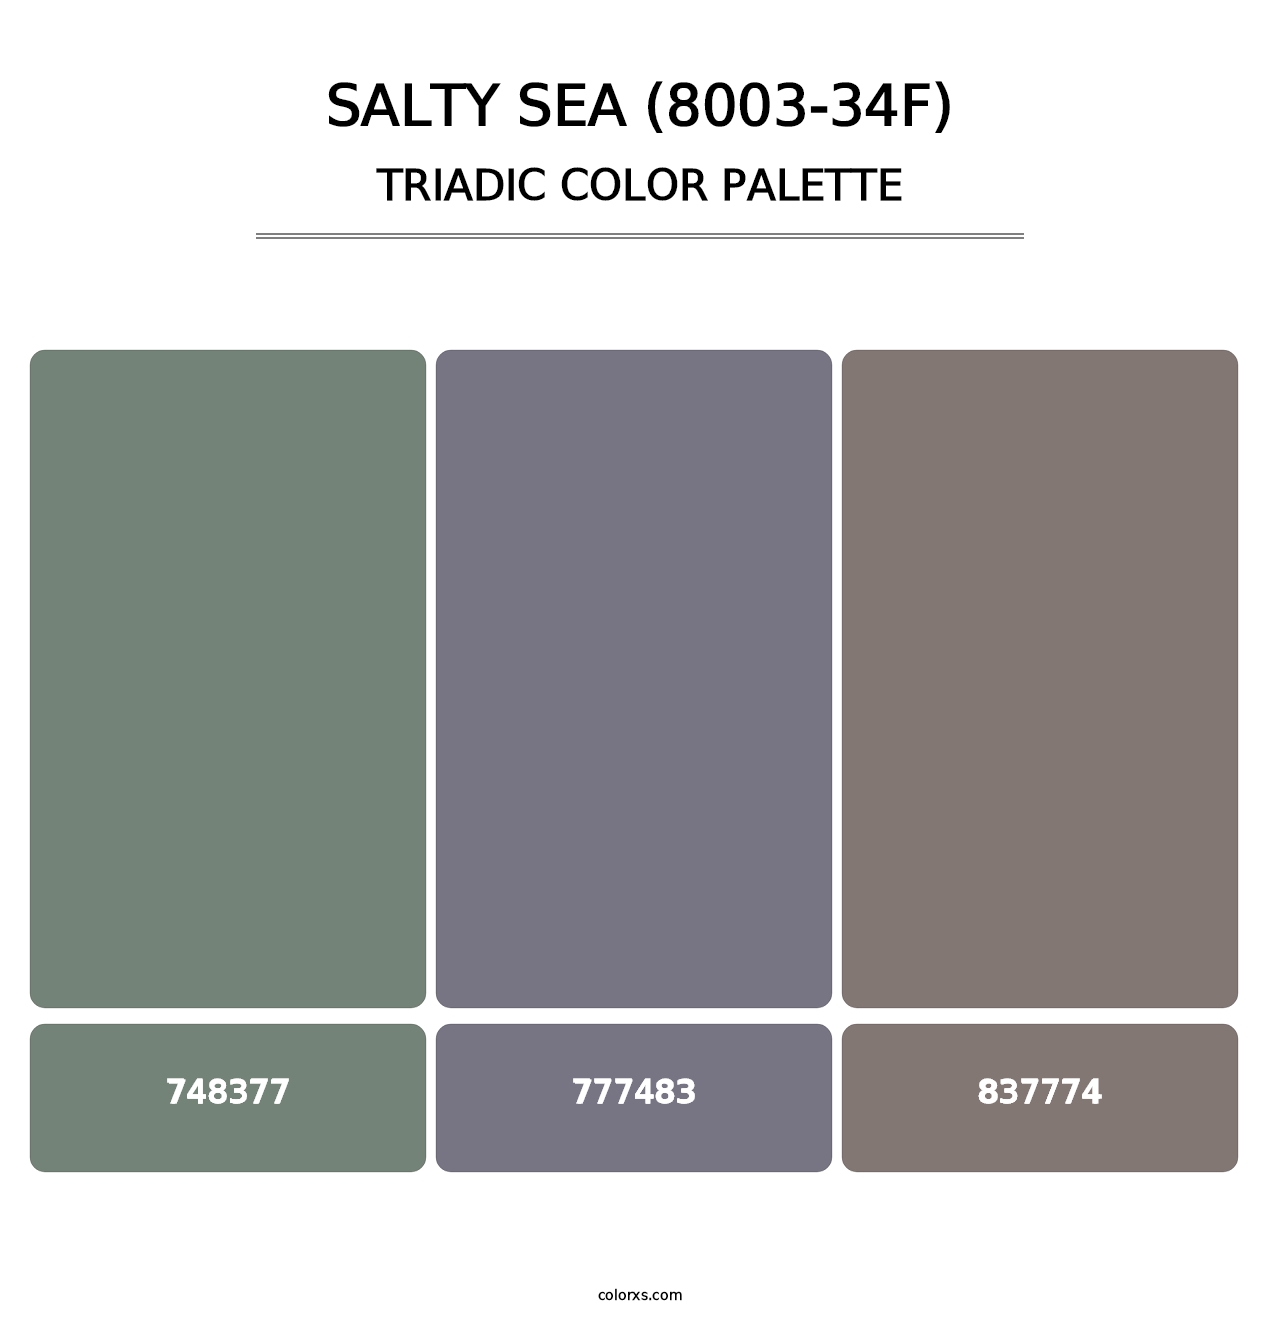 Salty Sea (8003-34F) - Triadic Color Palette